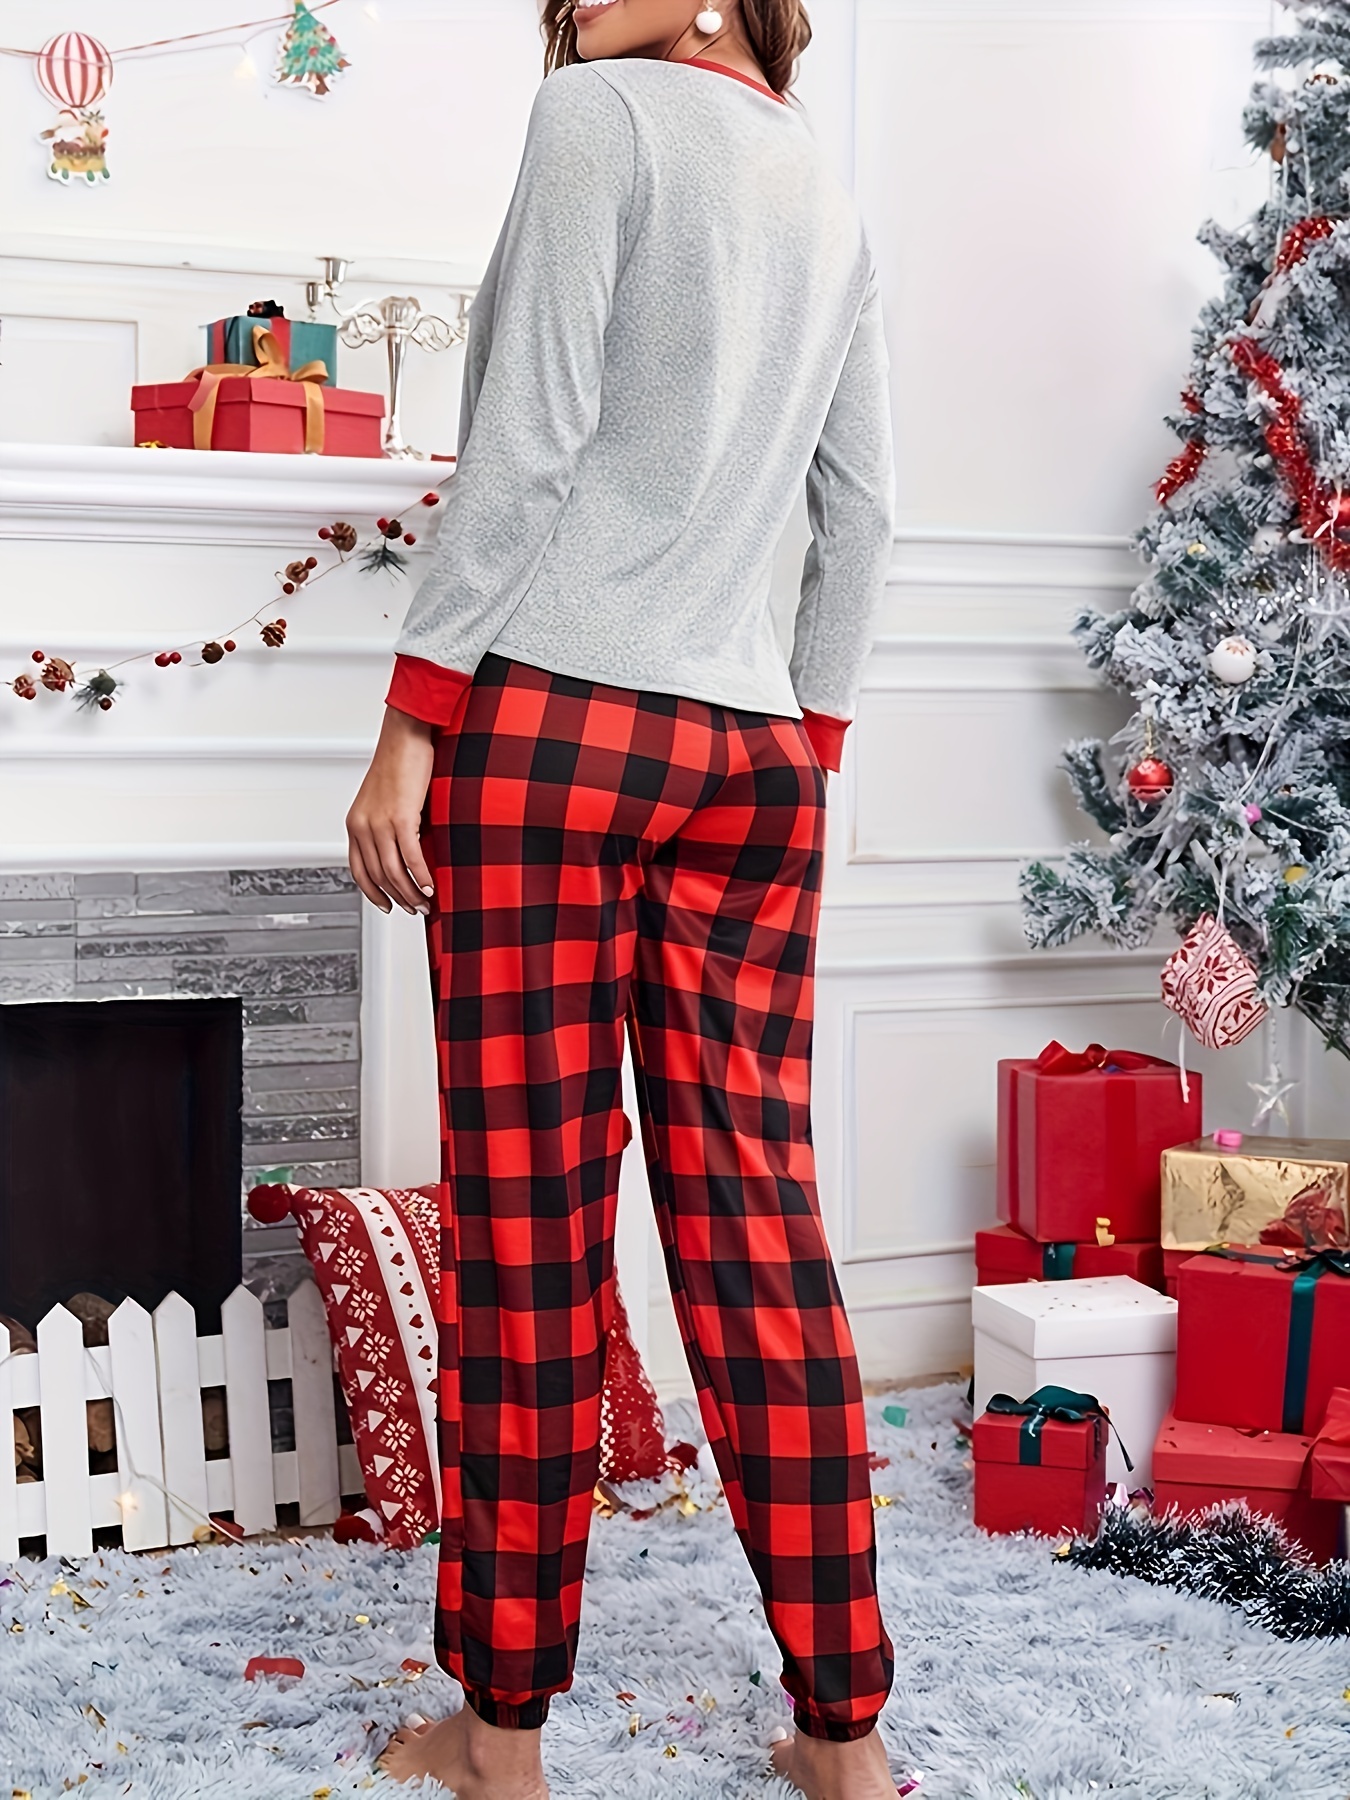 Family Matching Christmas Pajamas Set Xmas Top Buffalo Plaid Pants Sleepwear  